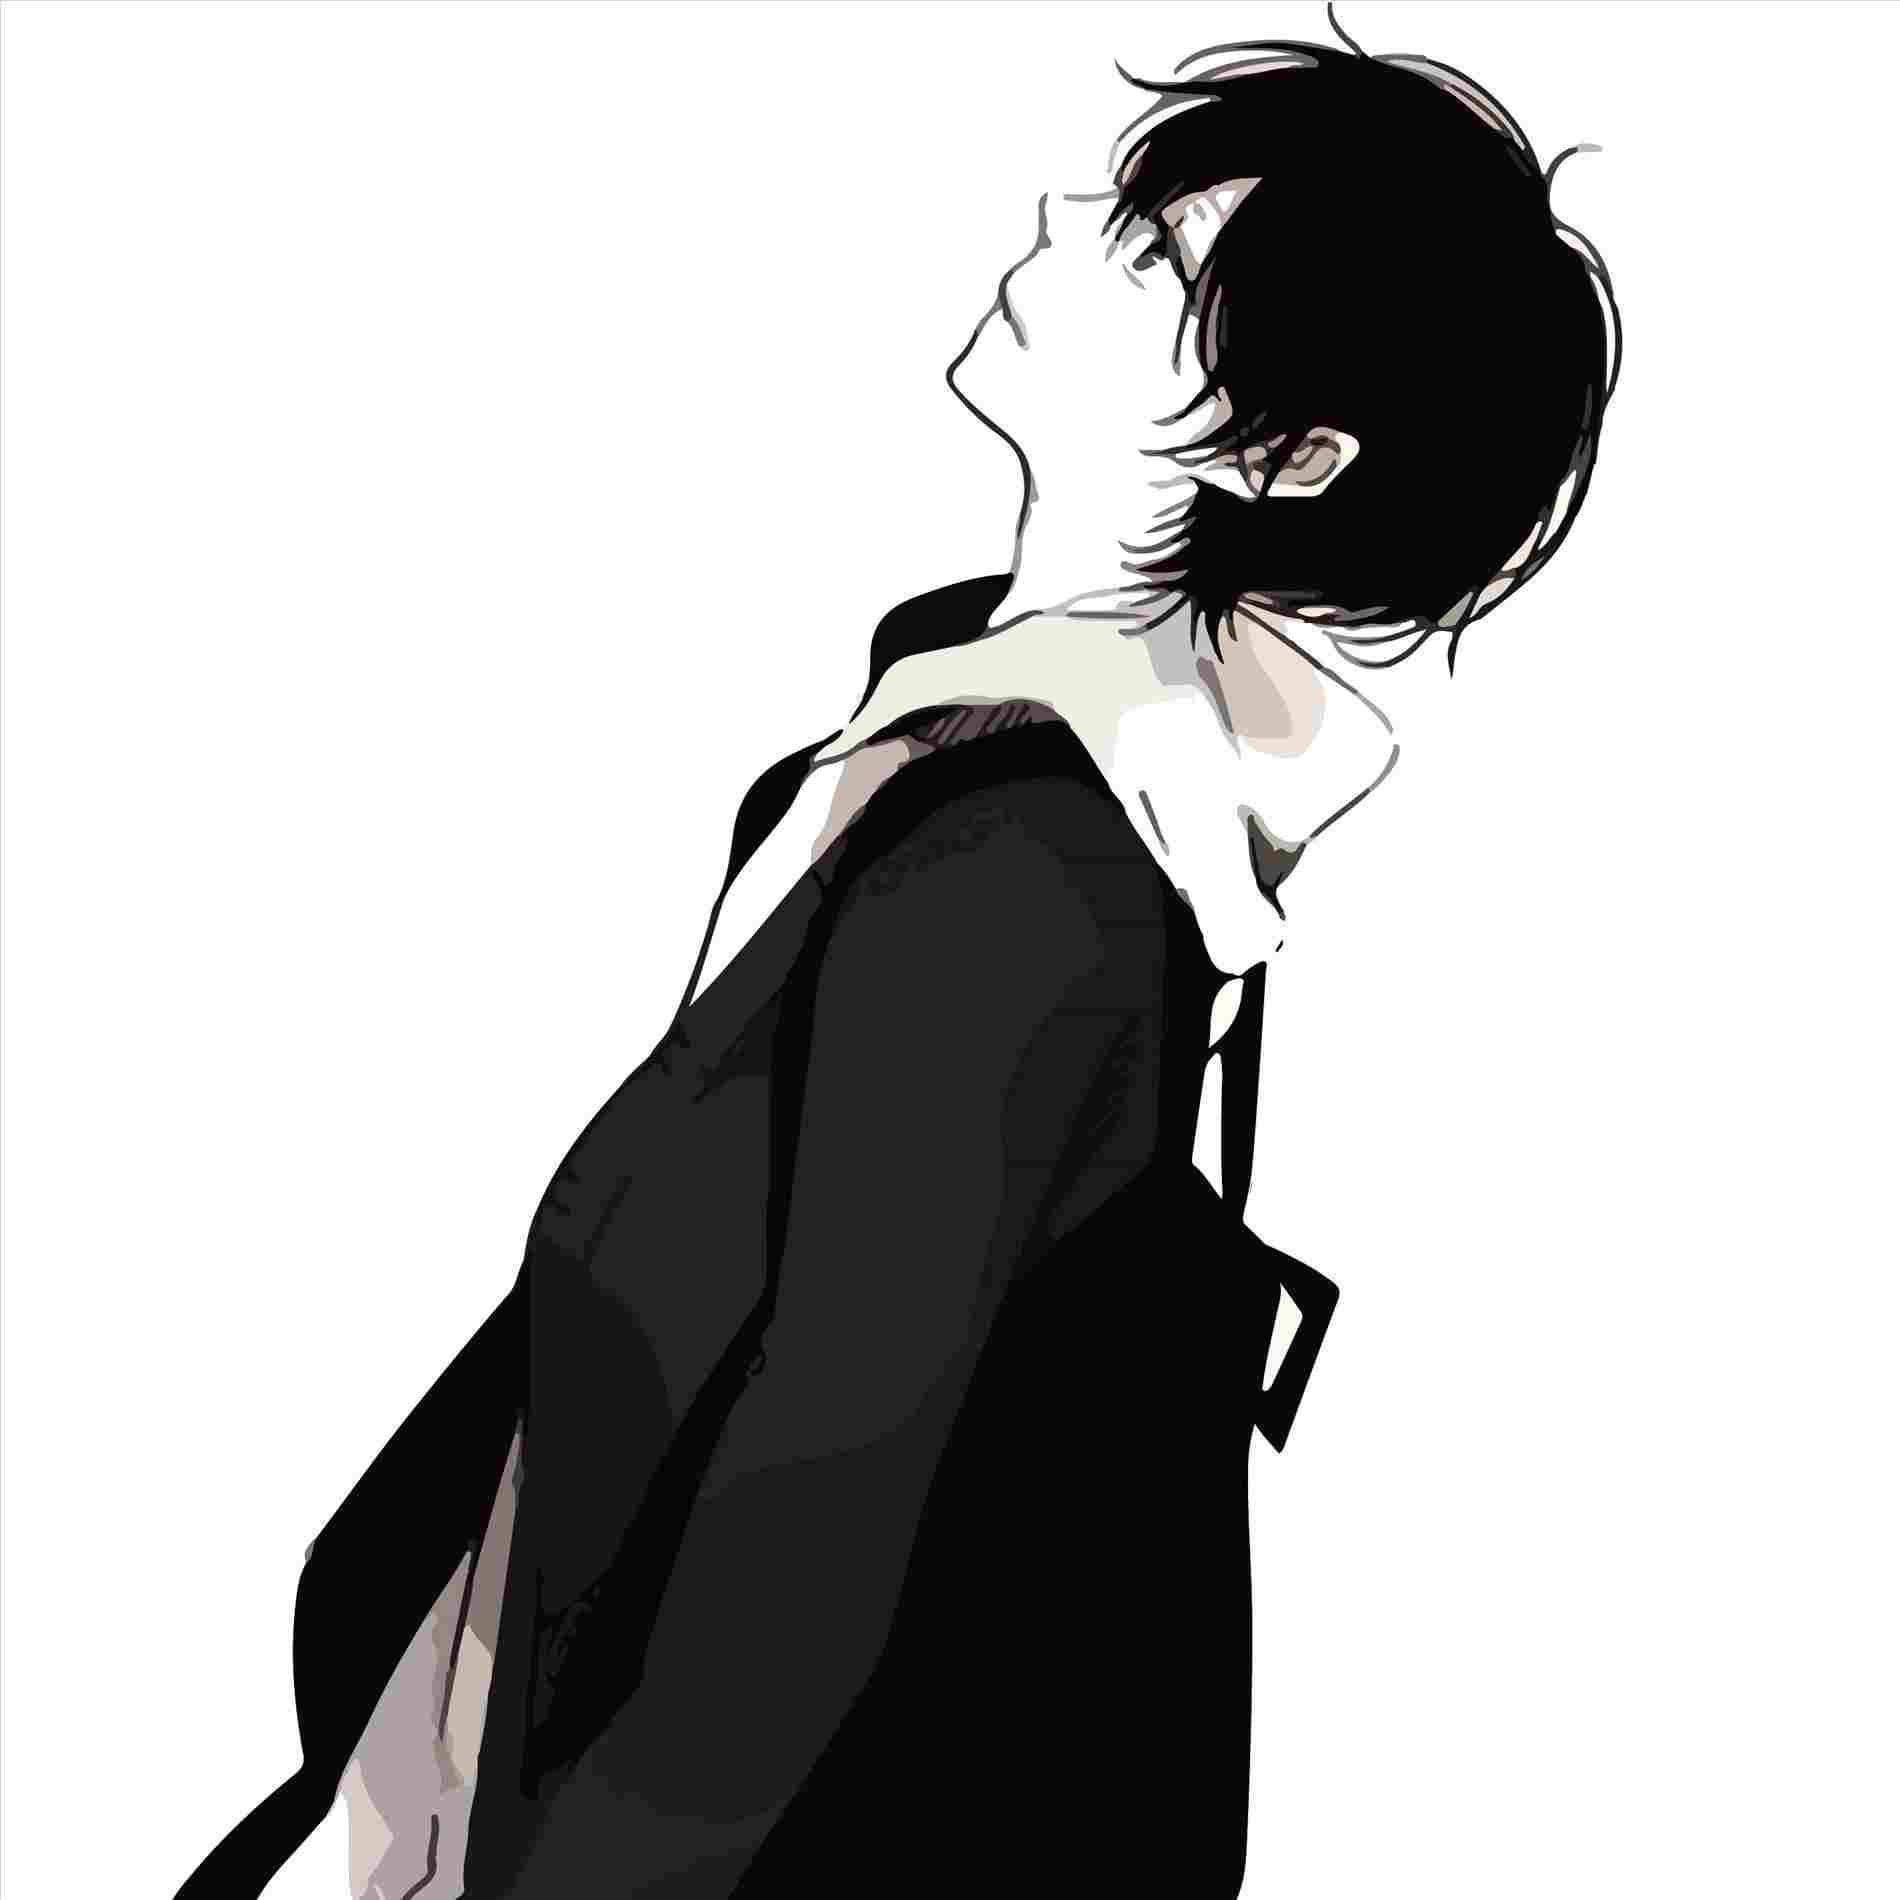 Moodful Monochrome - A Sad Anime Boy Pfp Wallpaper